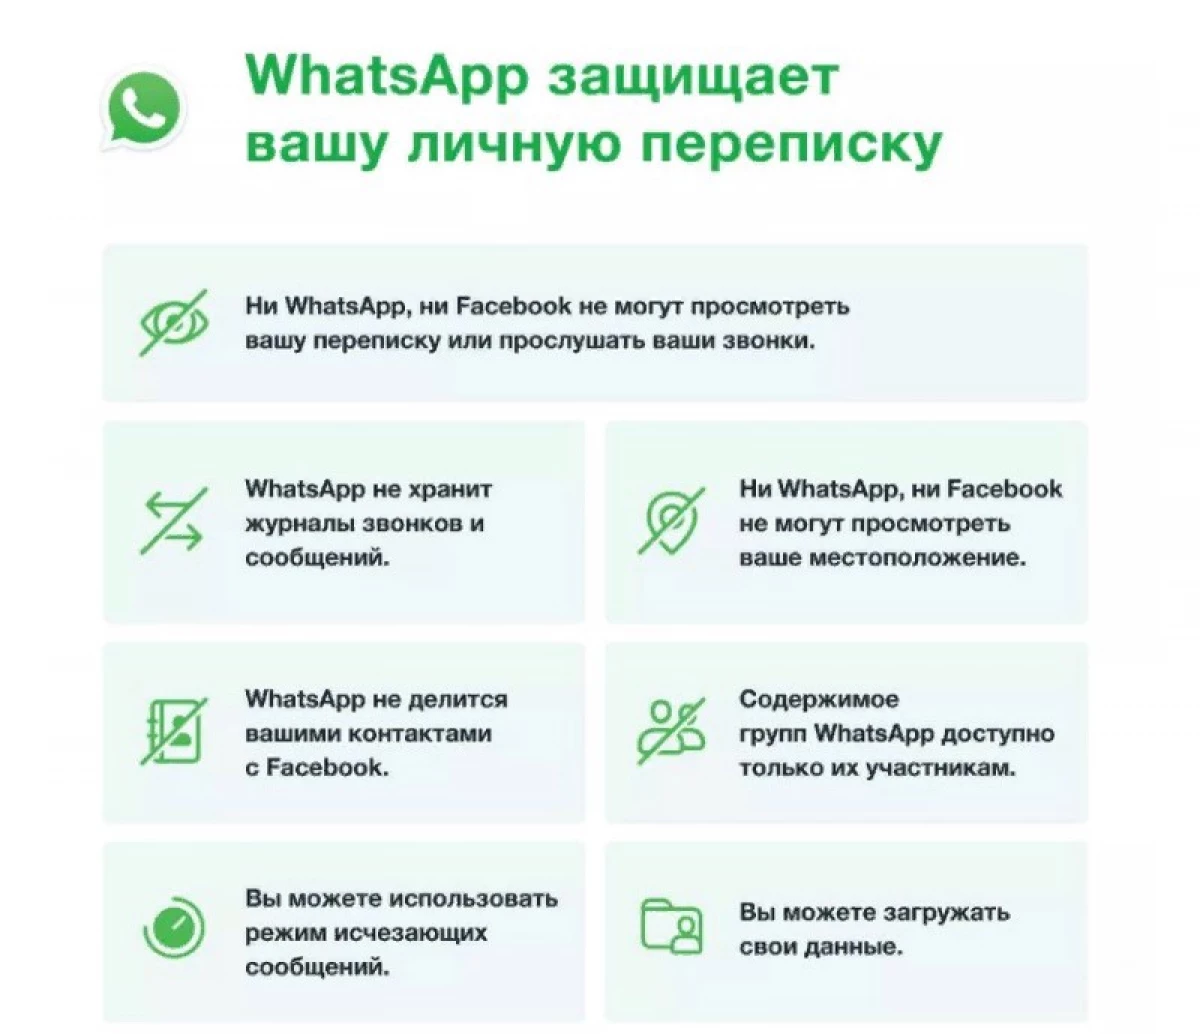 WhatsApp මඟින් ෆේස්බුක් වෙතින් පරිශීලක දත්ත බෙදා ගනී. ඔබේ අවසරය අසන්නේ නැත 6388_5